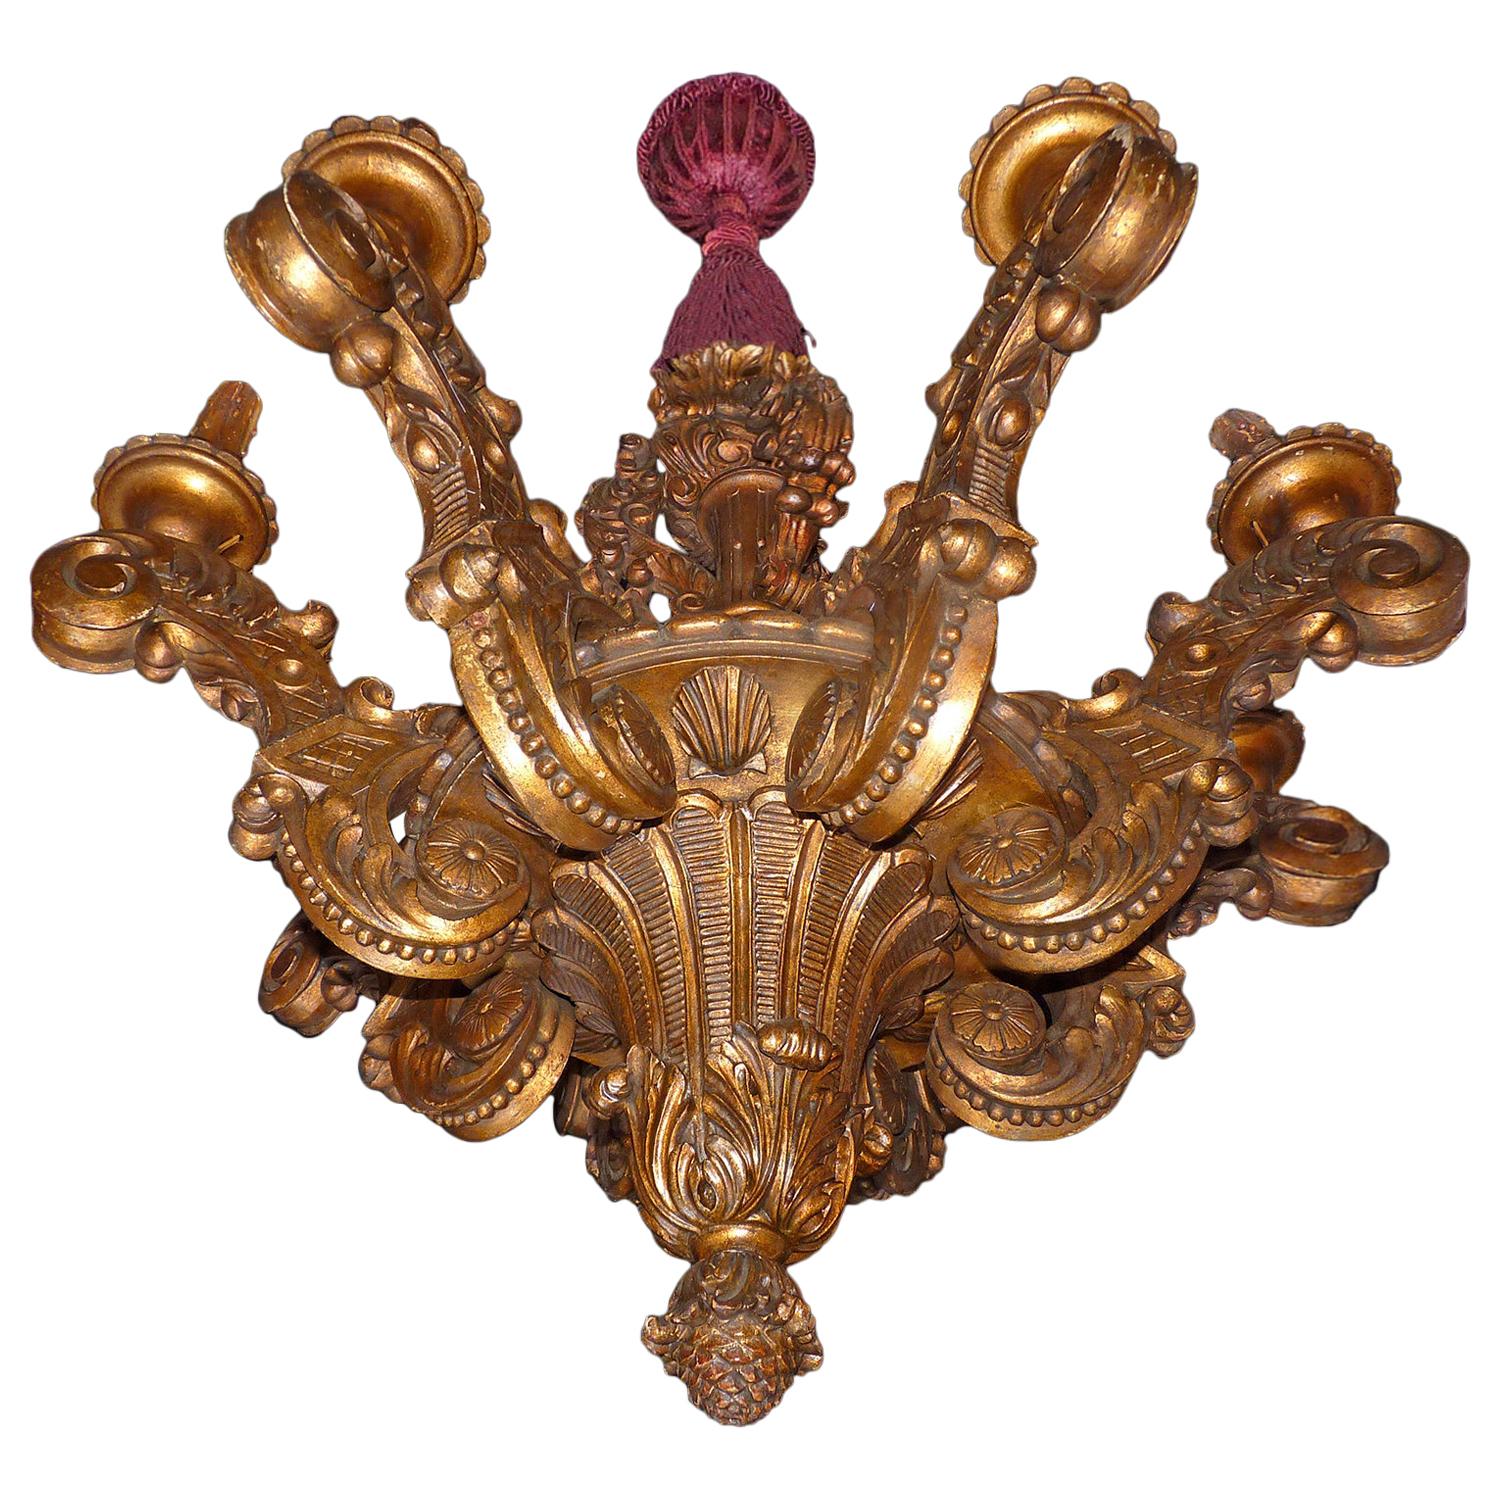 Großer französischer Regency-Kronleuchter aus Holz, Louis XV.-Stil, handgeschnitzt, Barock, vergoldetes Holz